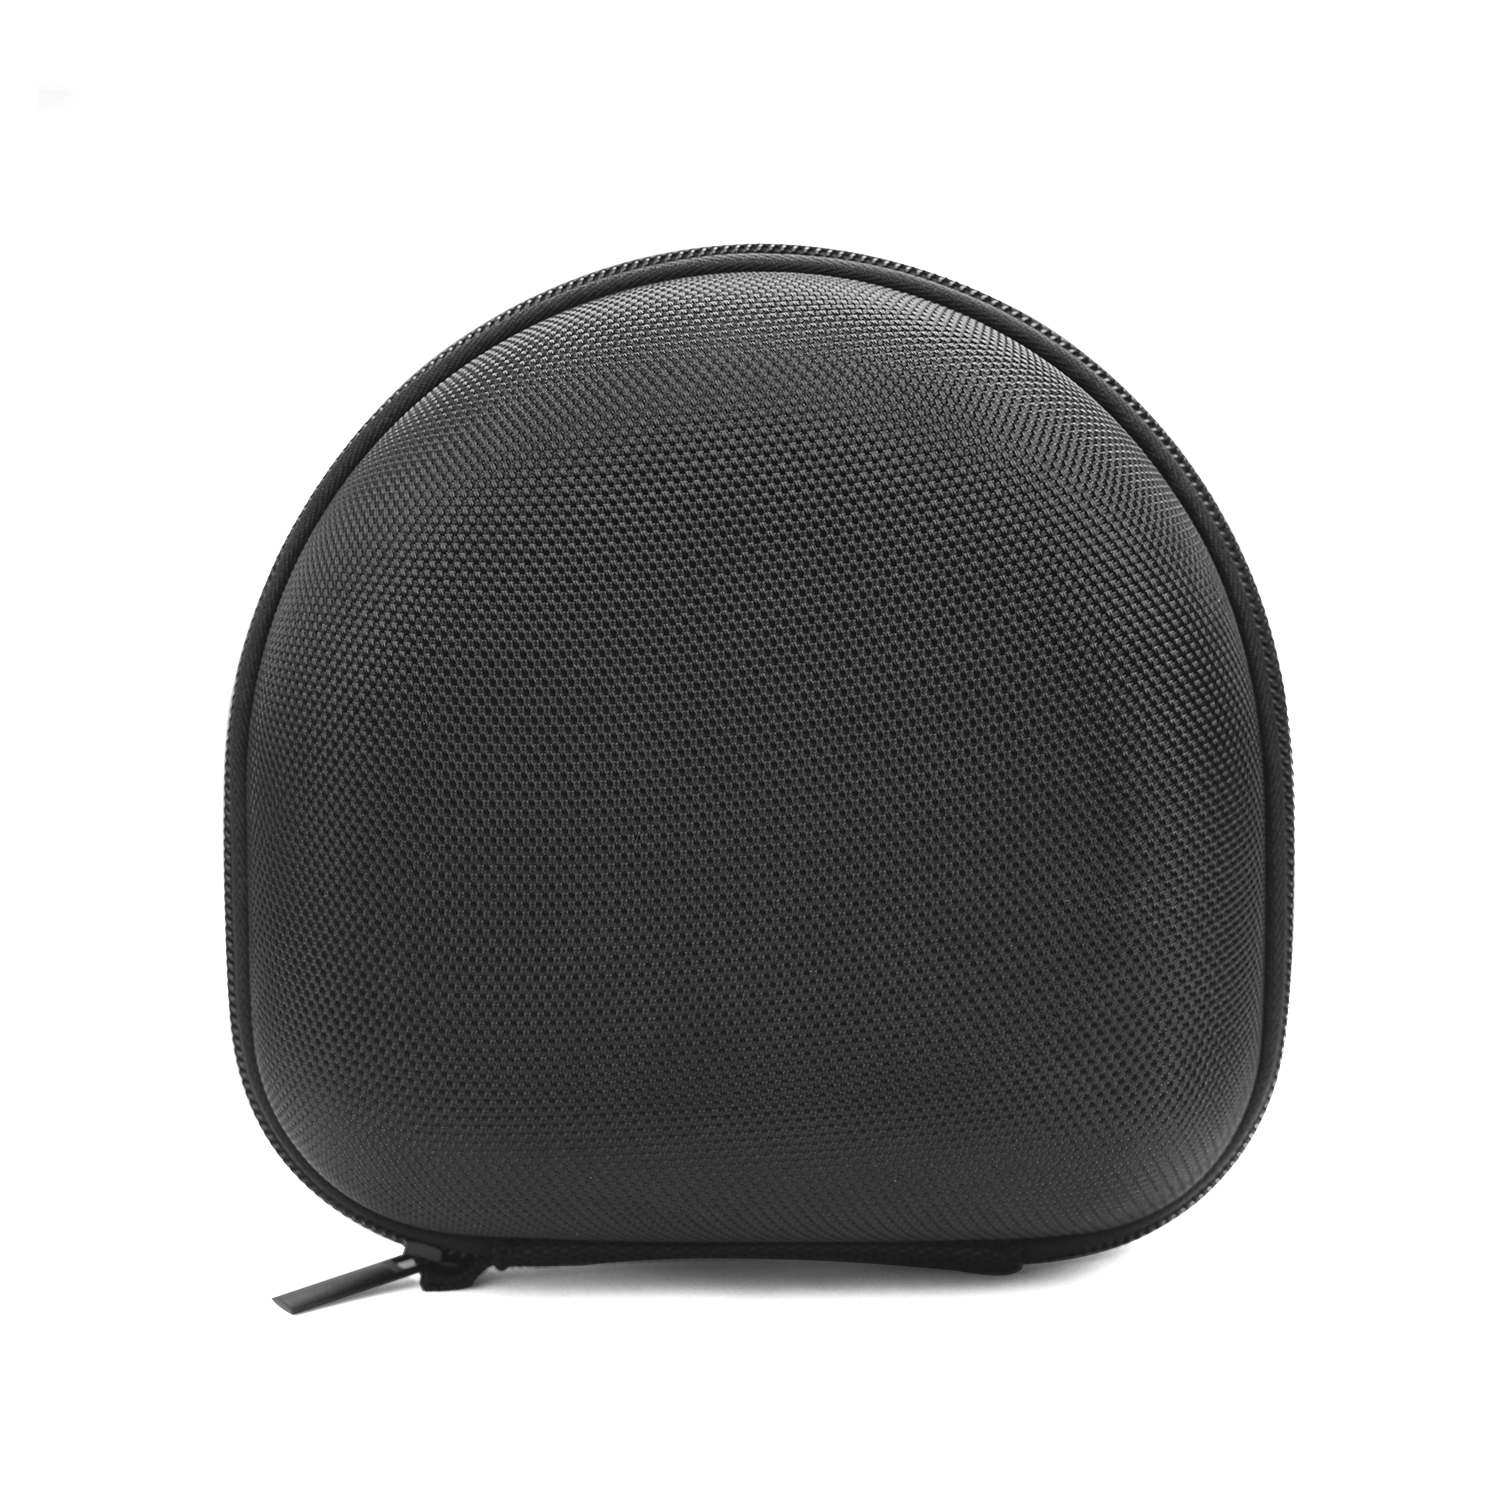 Bakeey-Headphone-Storage-Bag-Dustproof-Portable-Hard-Carrying-Case-Wireless-Head-Mounted-Headset-Pro-1800702-4